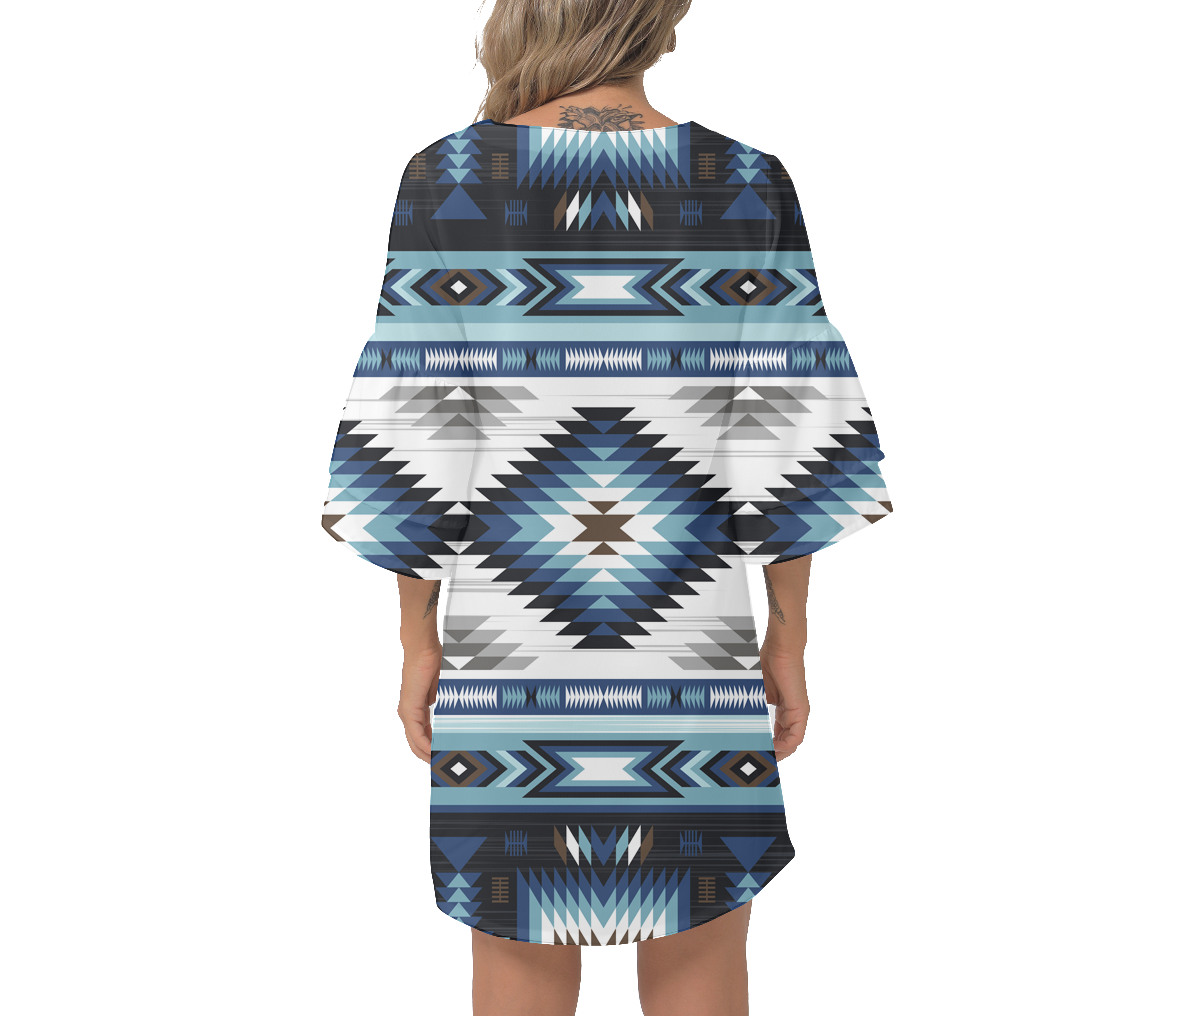 Powwow Storegb nat00528 native design print womens v neck dresss